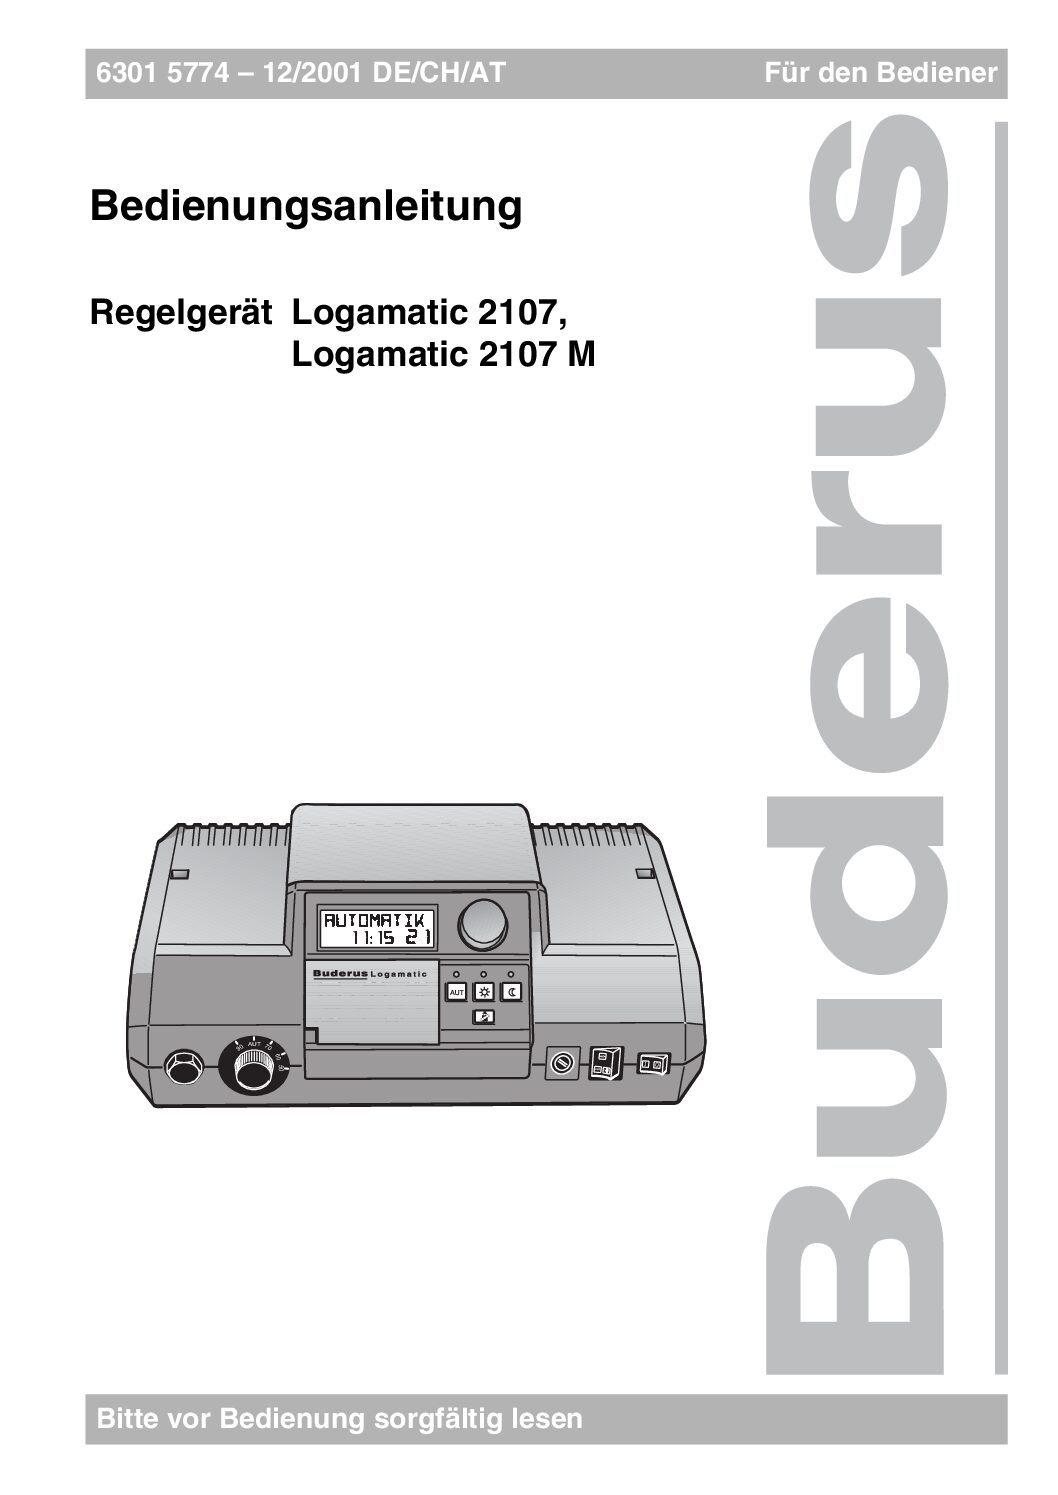 Buderus Logamatic 2107 M Bedienungsanleitung